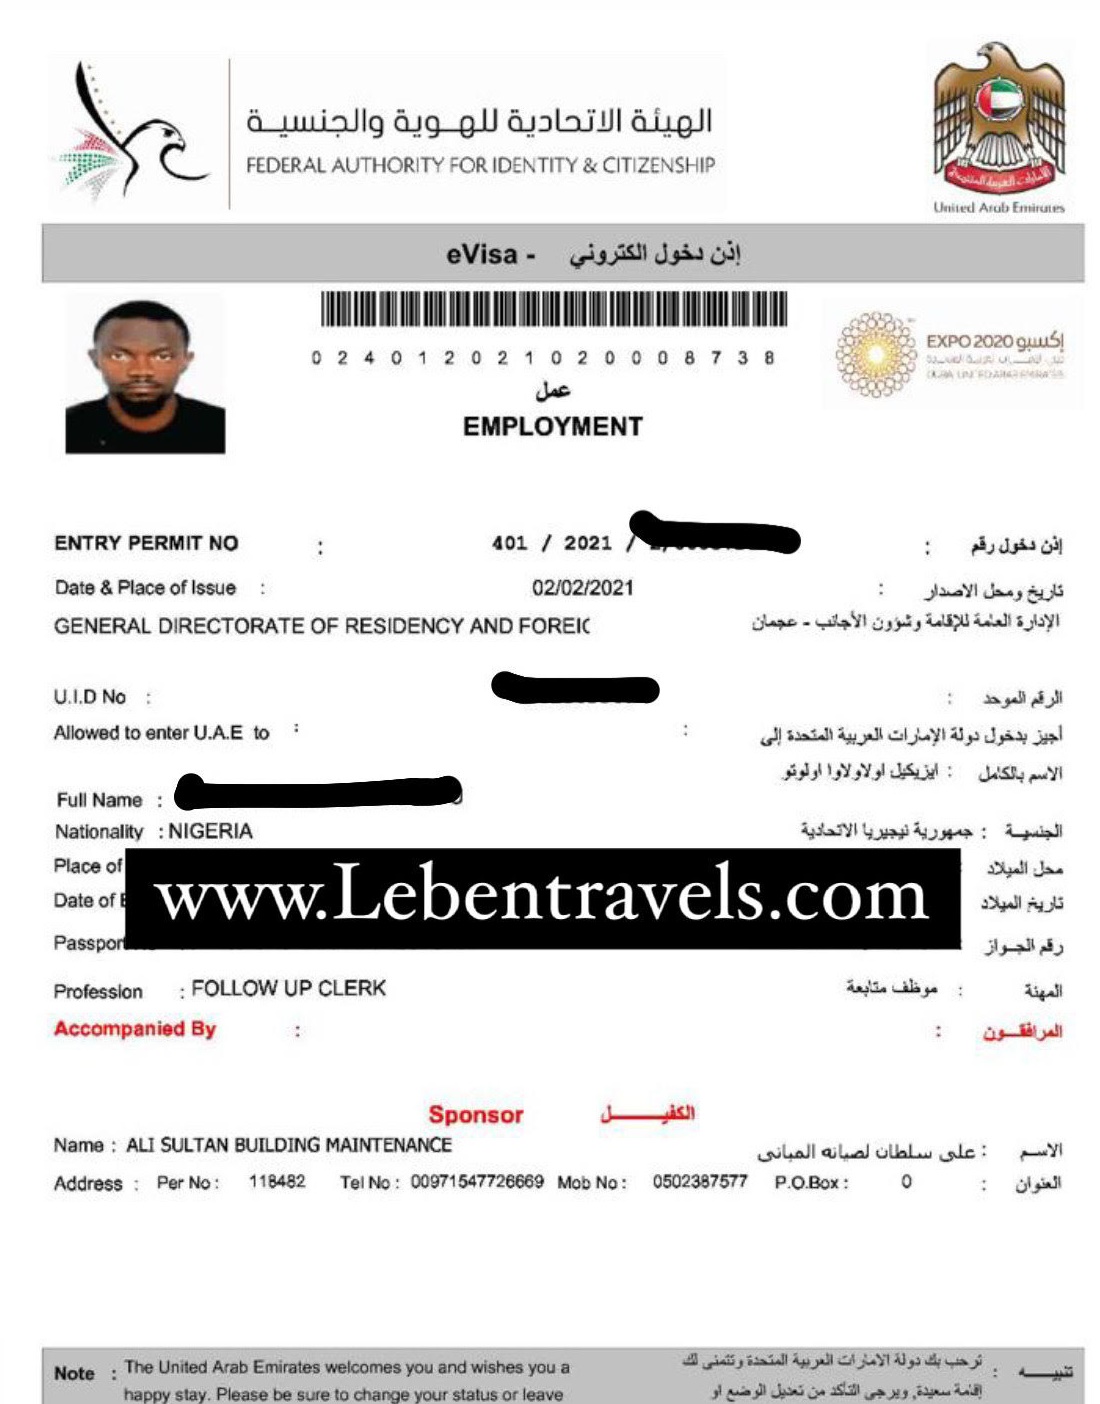 Dubai visit visa for job search